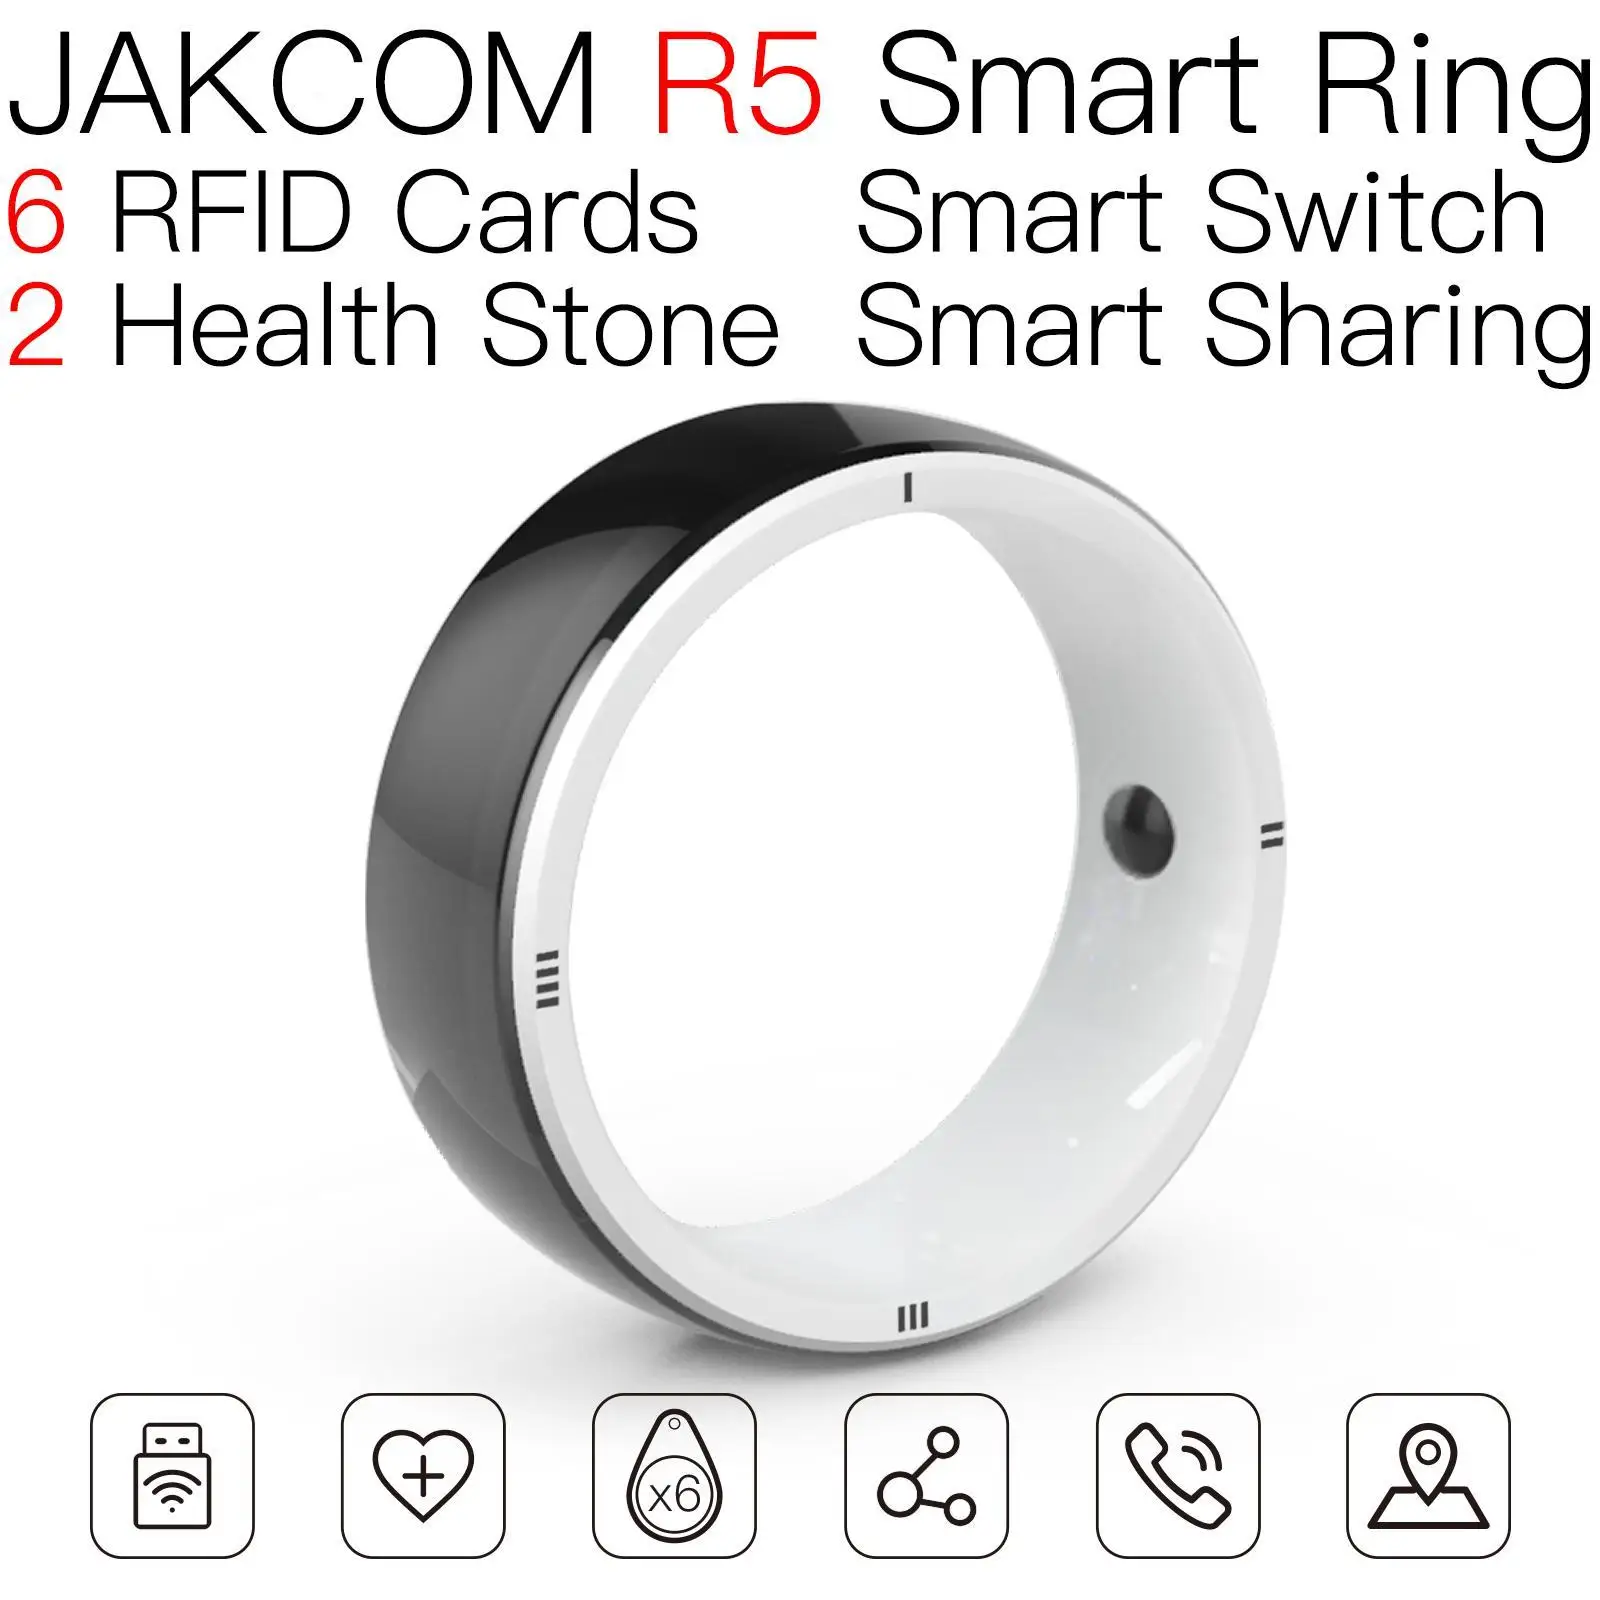 

JAKCOM R5 Smart Ring better than antenna nfc 1 mes em id rfid card t5577 hotel keyfobs for proximity transponder kit